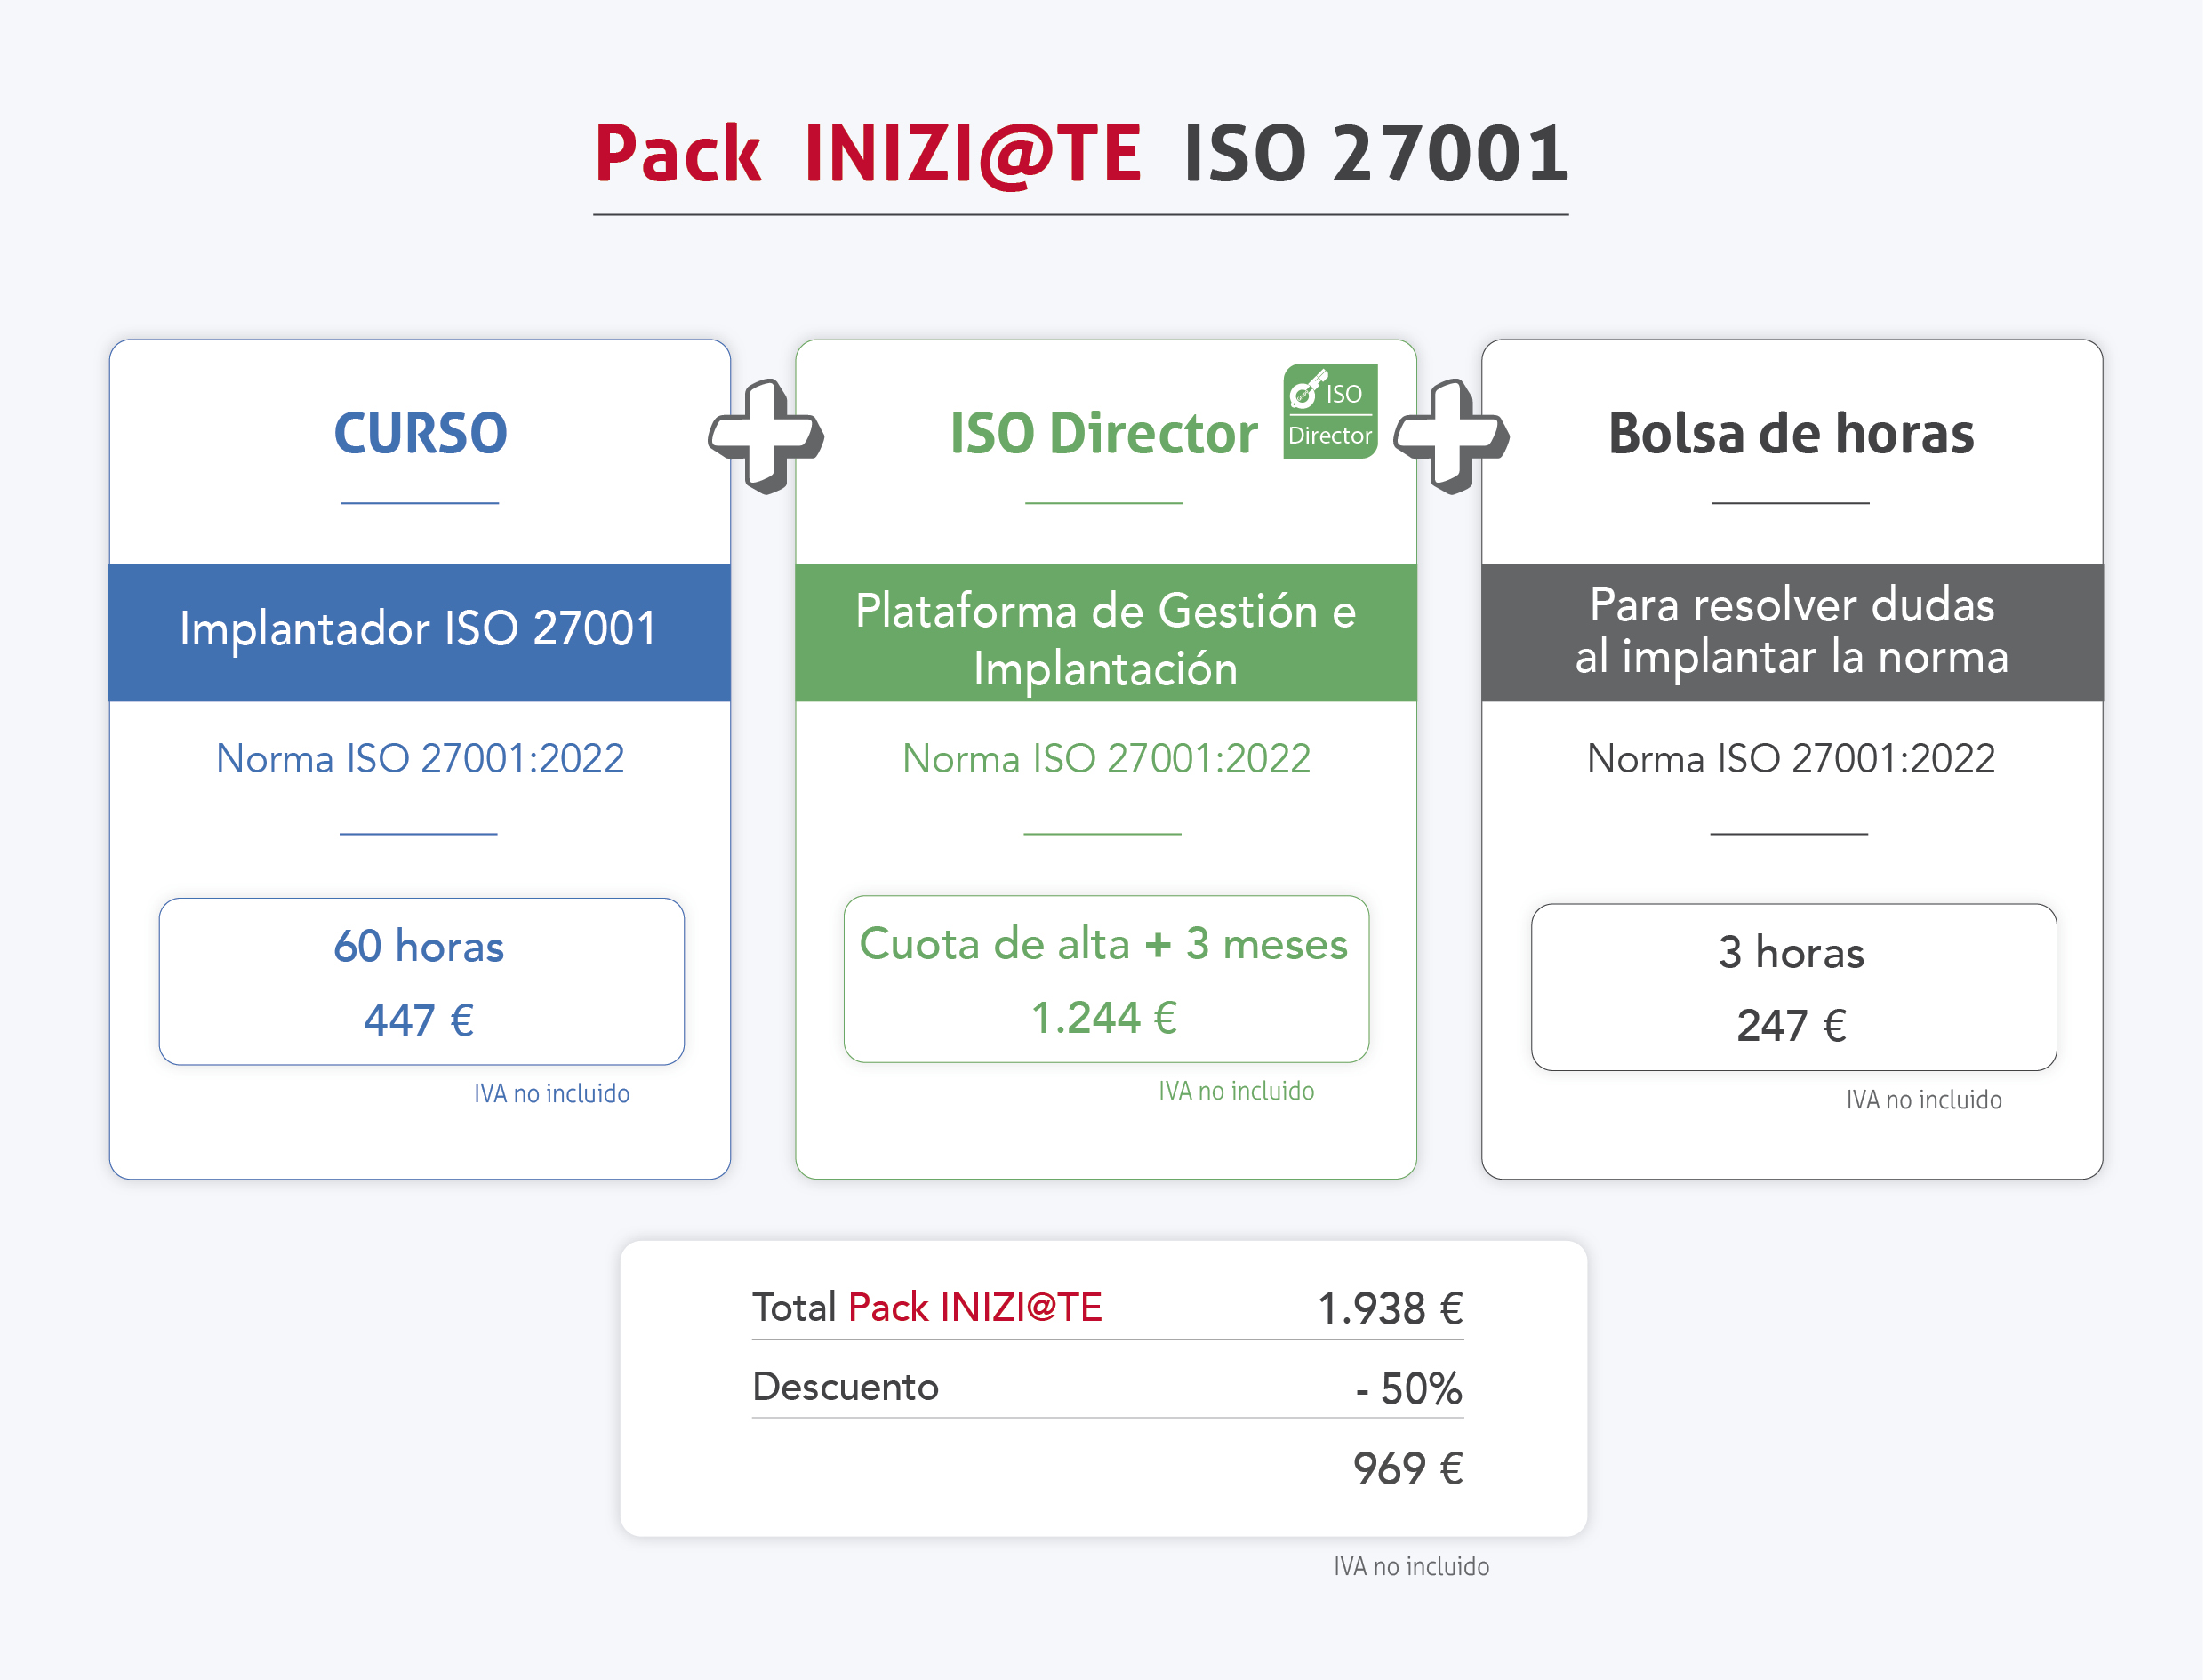 PACK INIZI@TE ISO 27001 